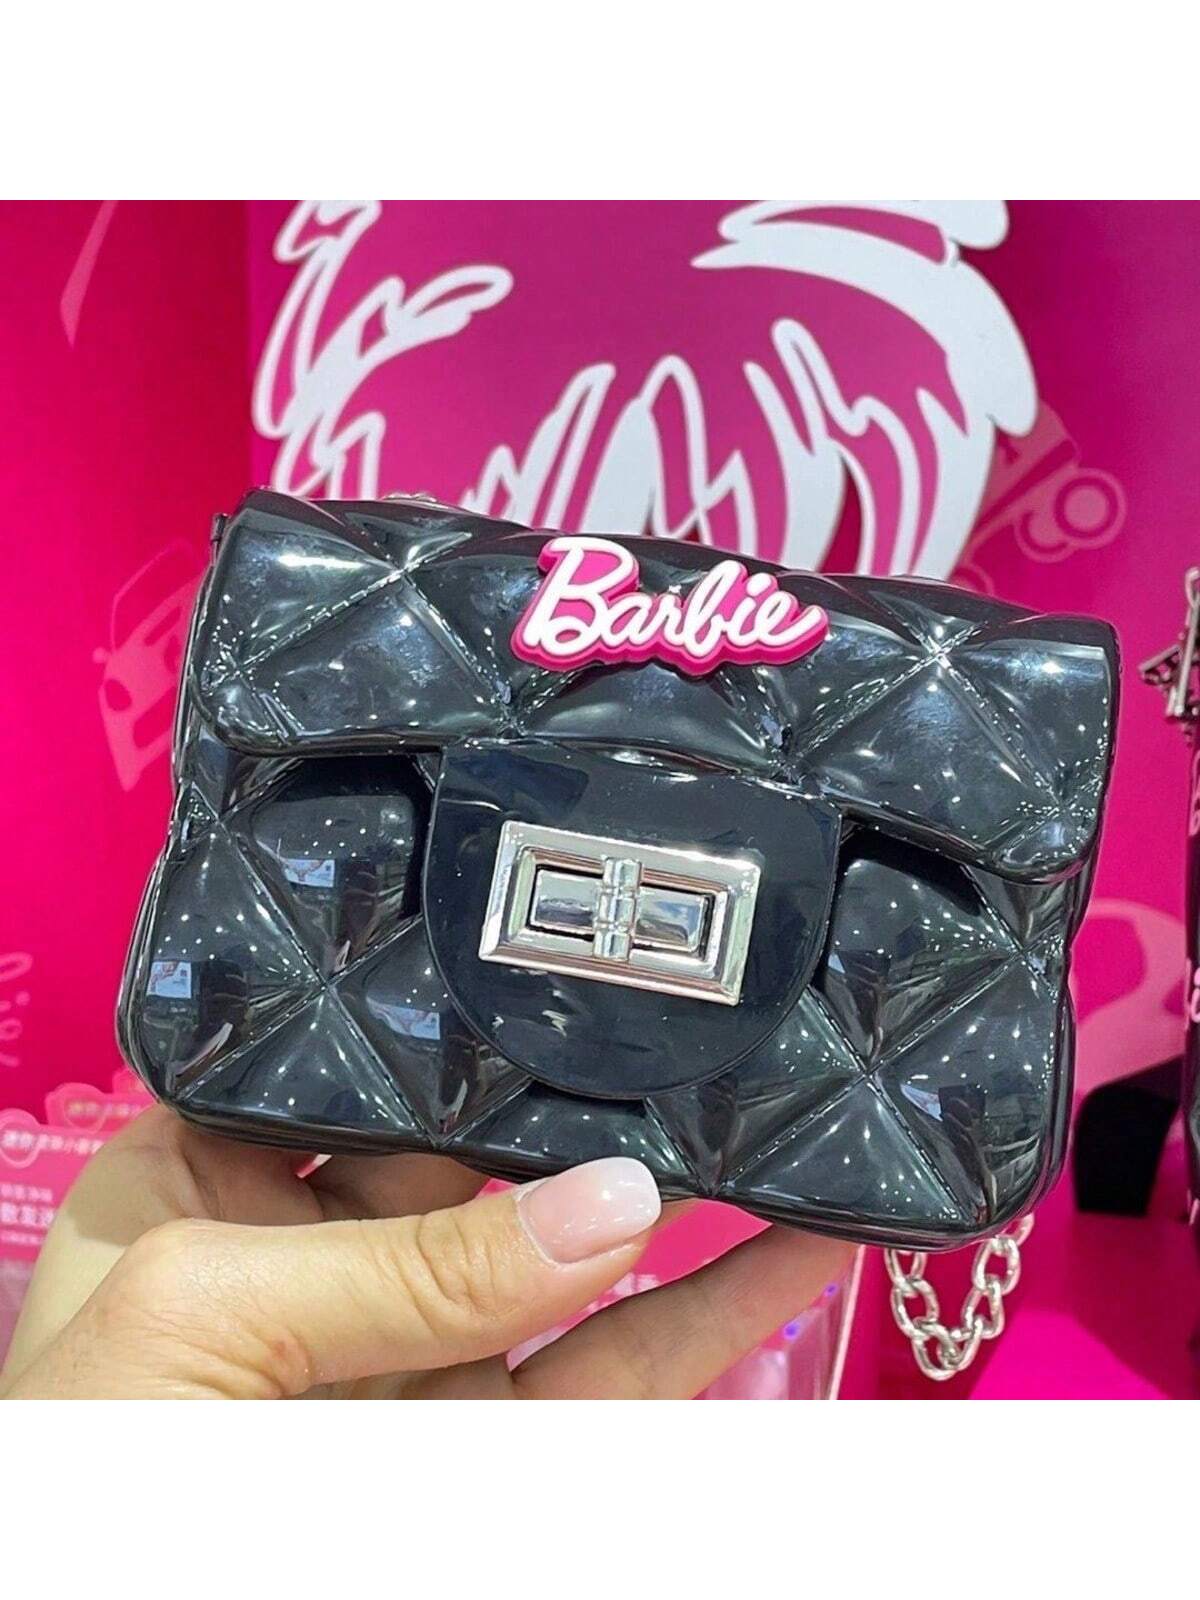 Miniso Barbie Series, черный сумка милый бегемотик бежевый